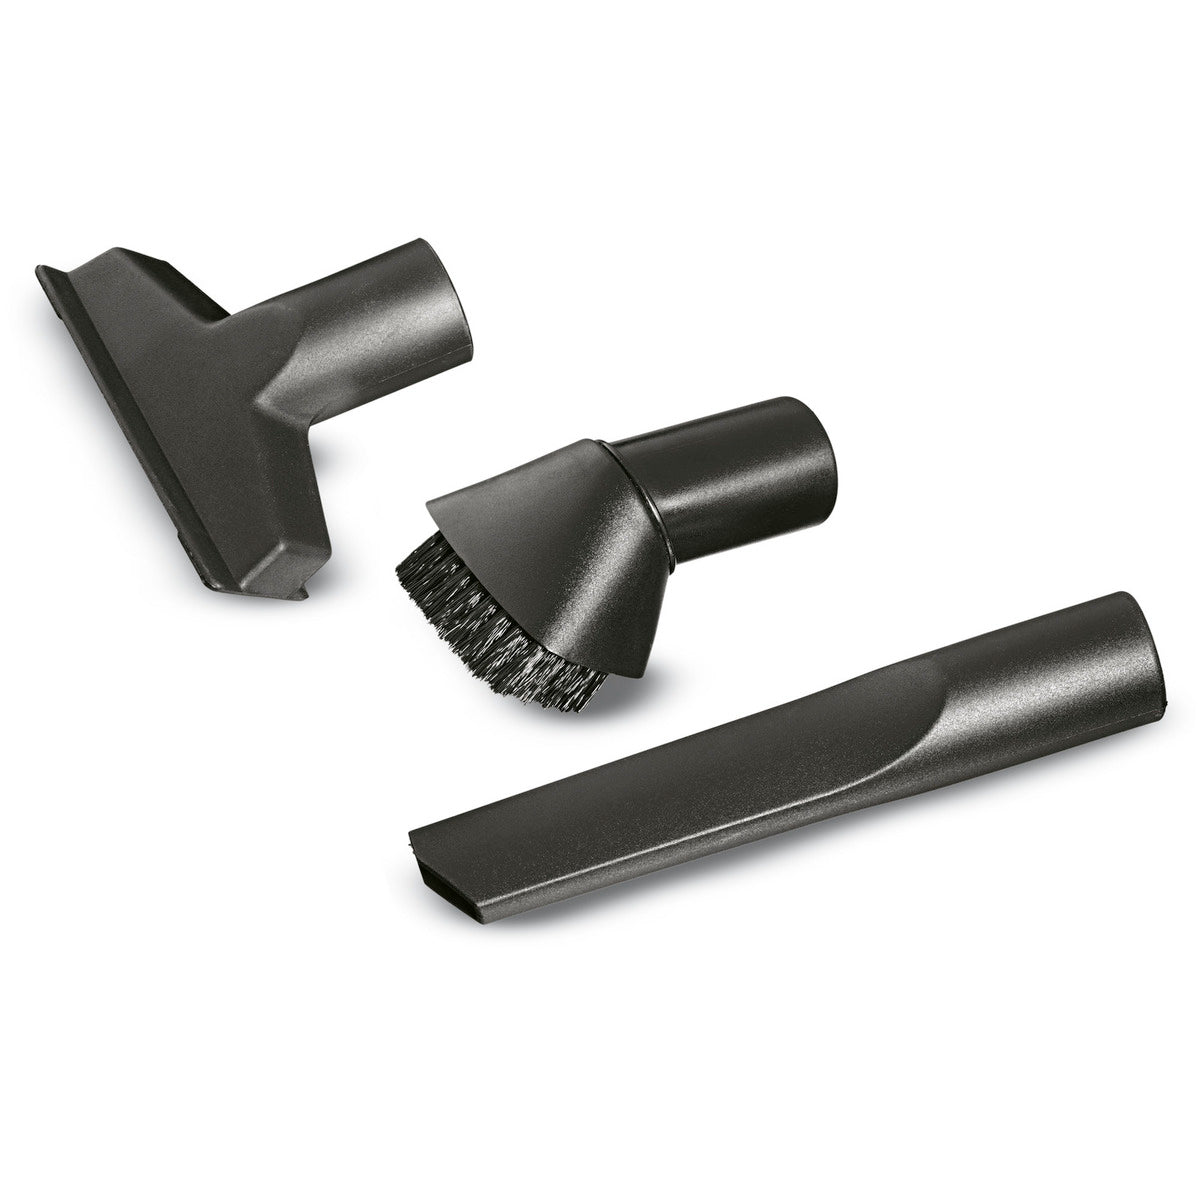 Karcher Nozzle Kit: Crevice Nozzle, Upholstery Nozzle, Suction Brush, DN 35